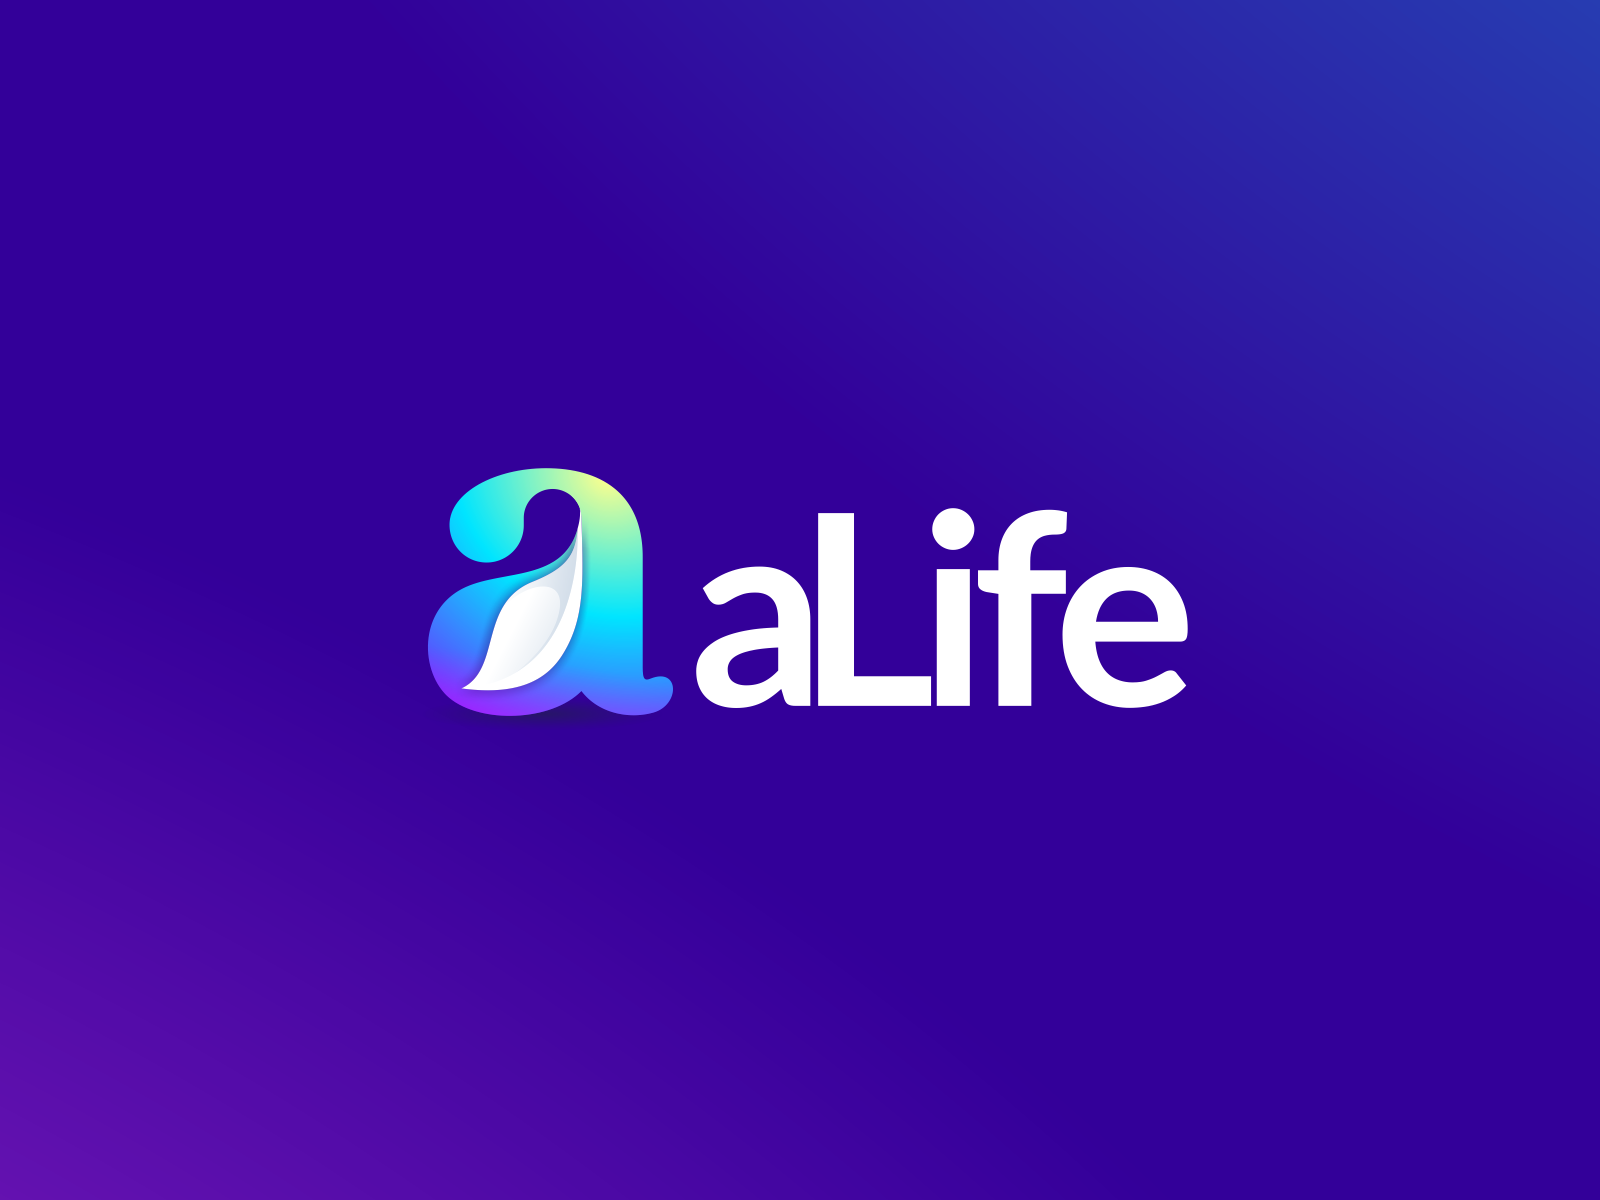 alife logo design by Lelevien on Dribbble